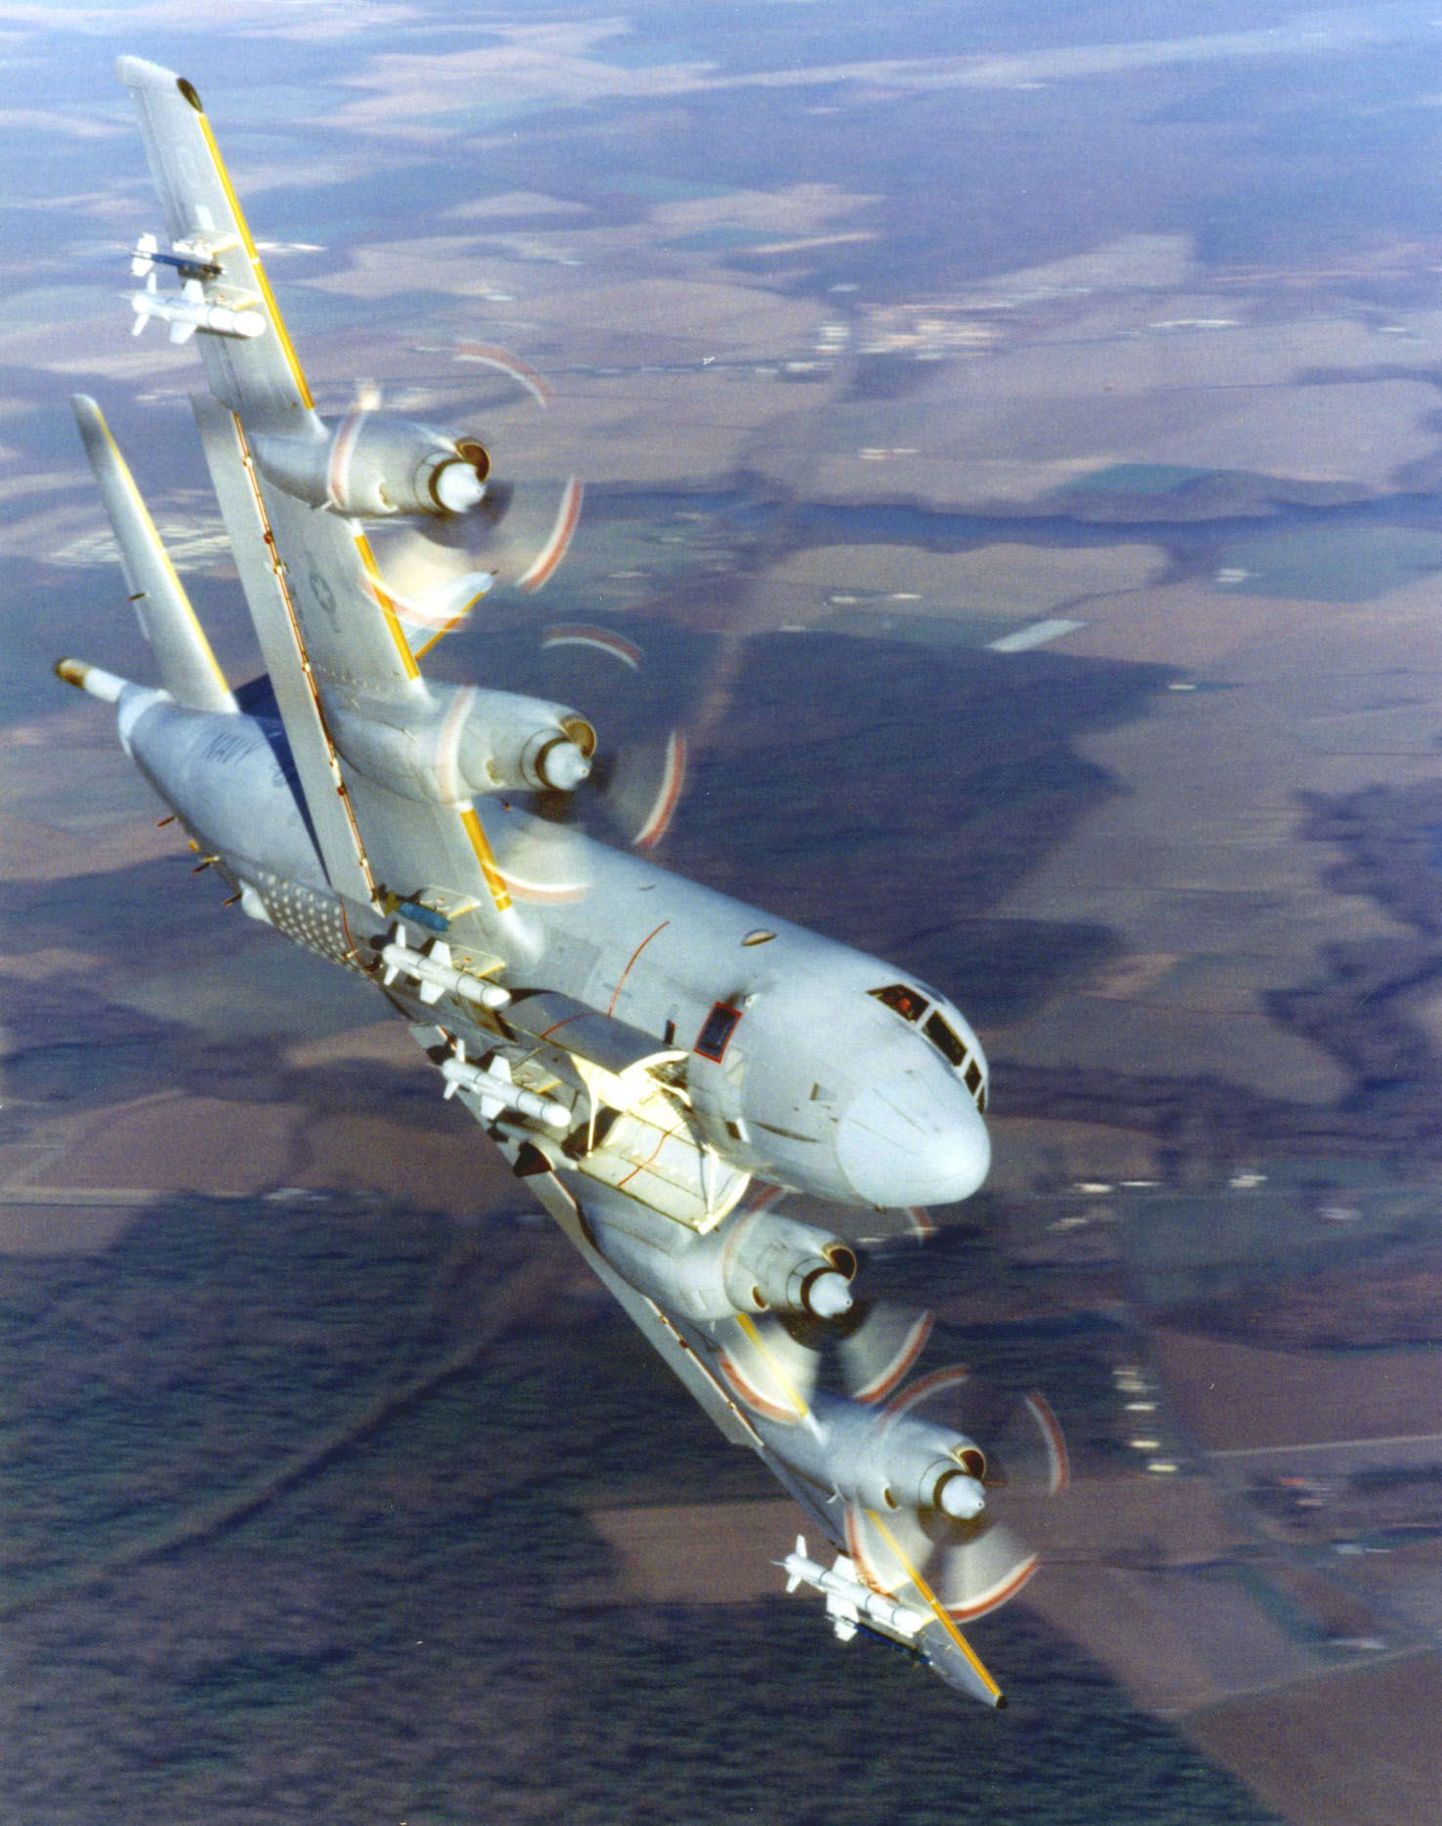 P-3C-tüüpi lennuk Ühendriikide lennuväes.